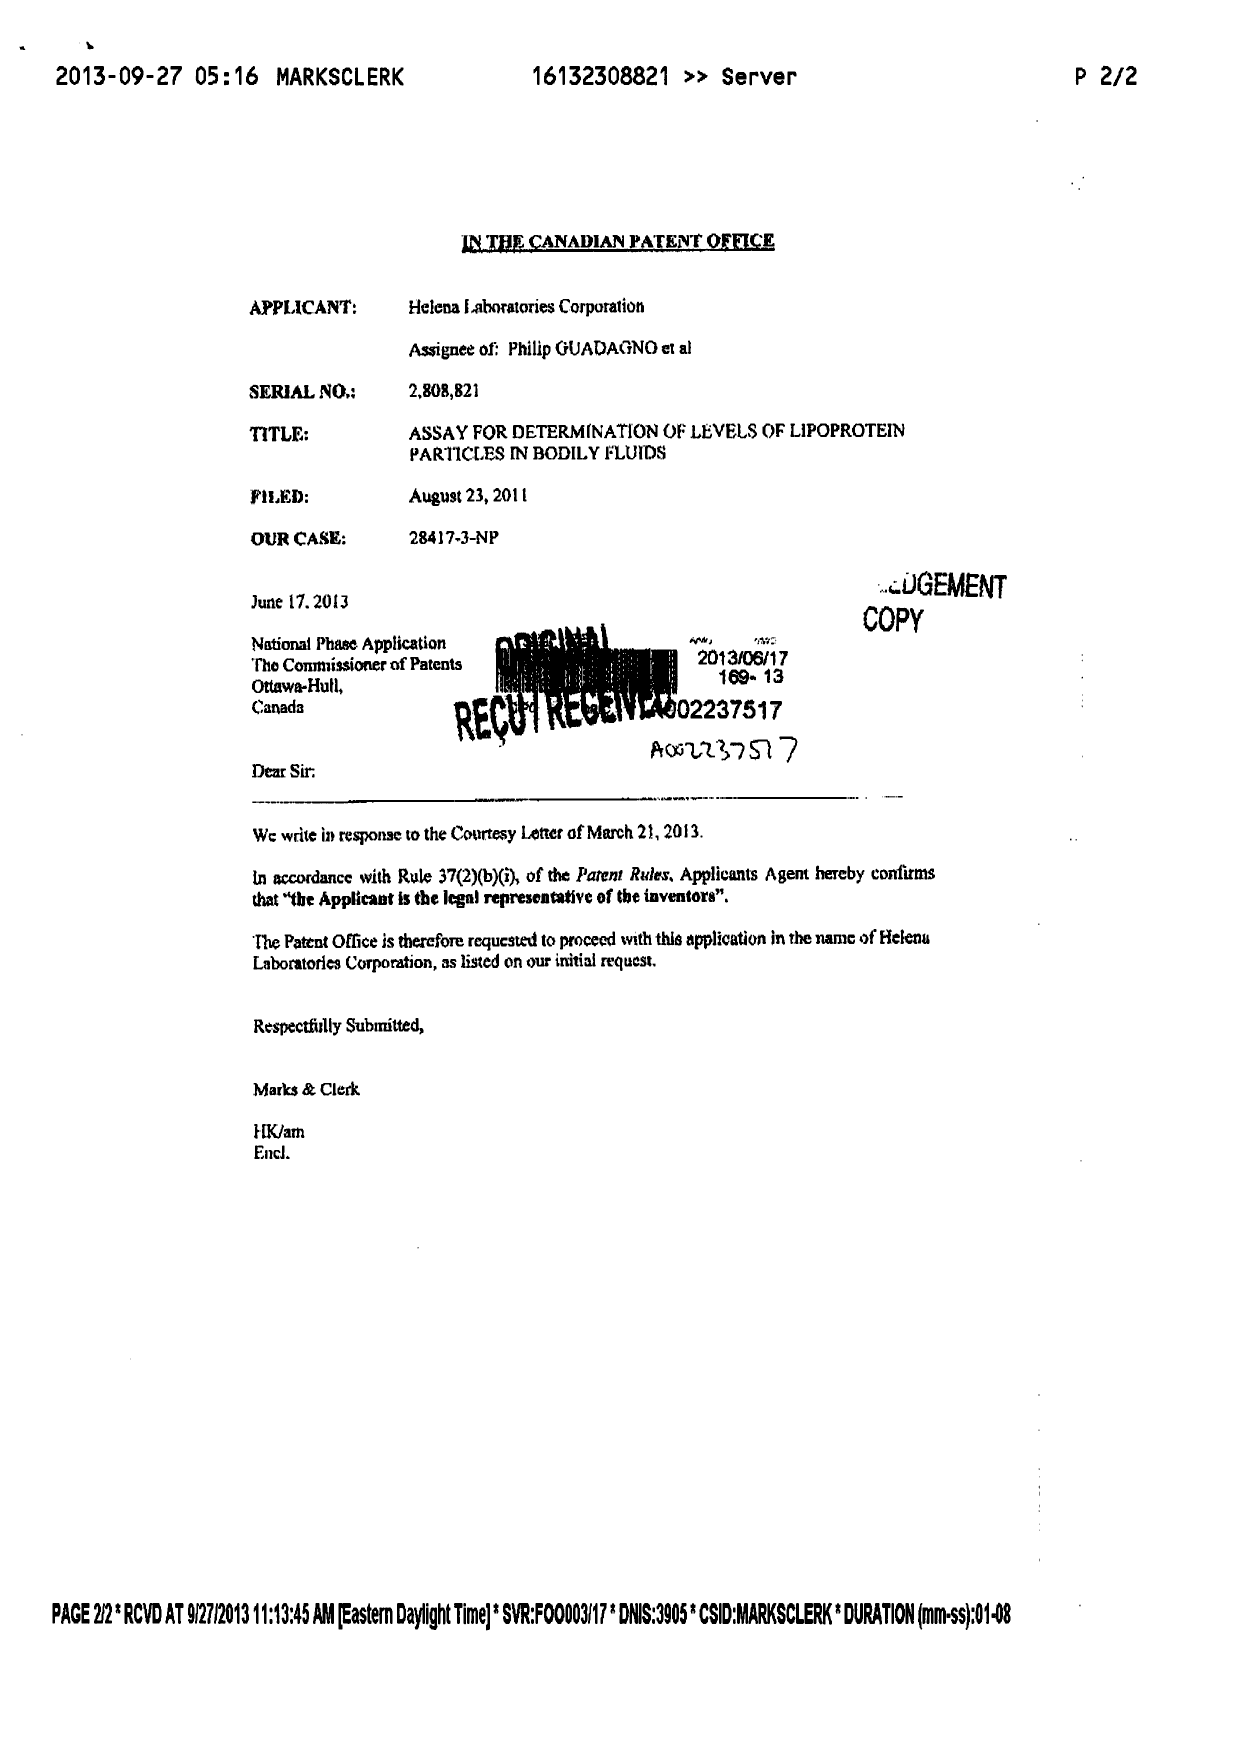 Canadian Patent Document 2808821. Correspondence 20121227. Image 2 of 2